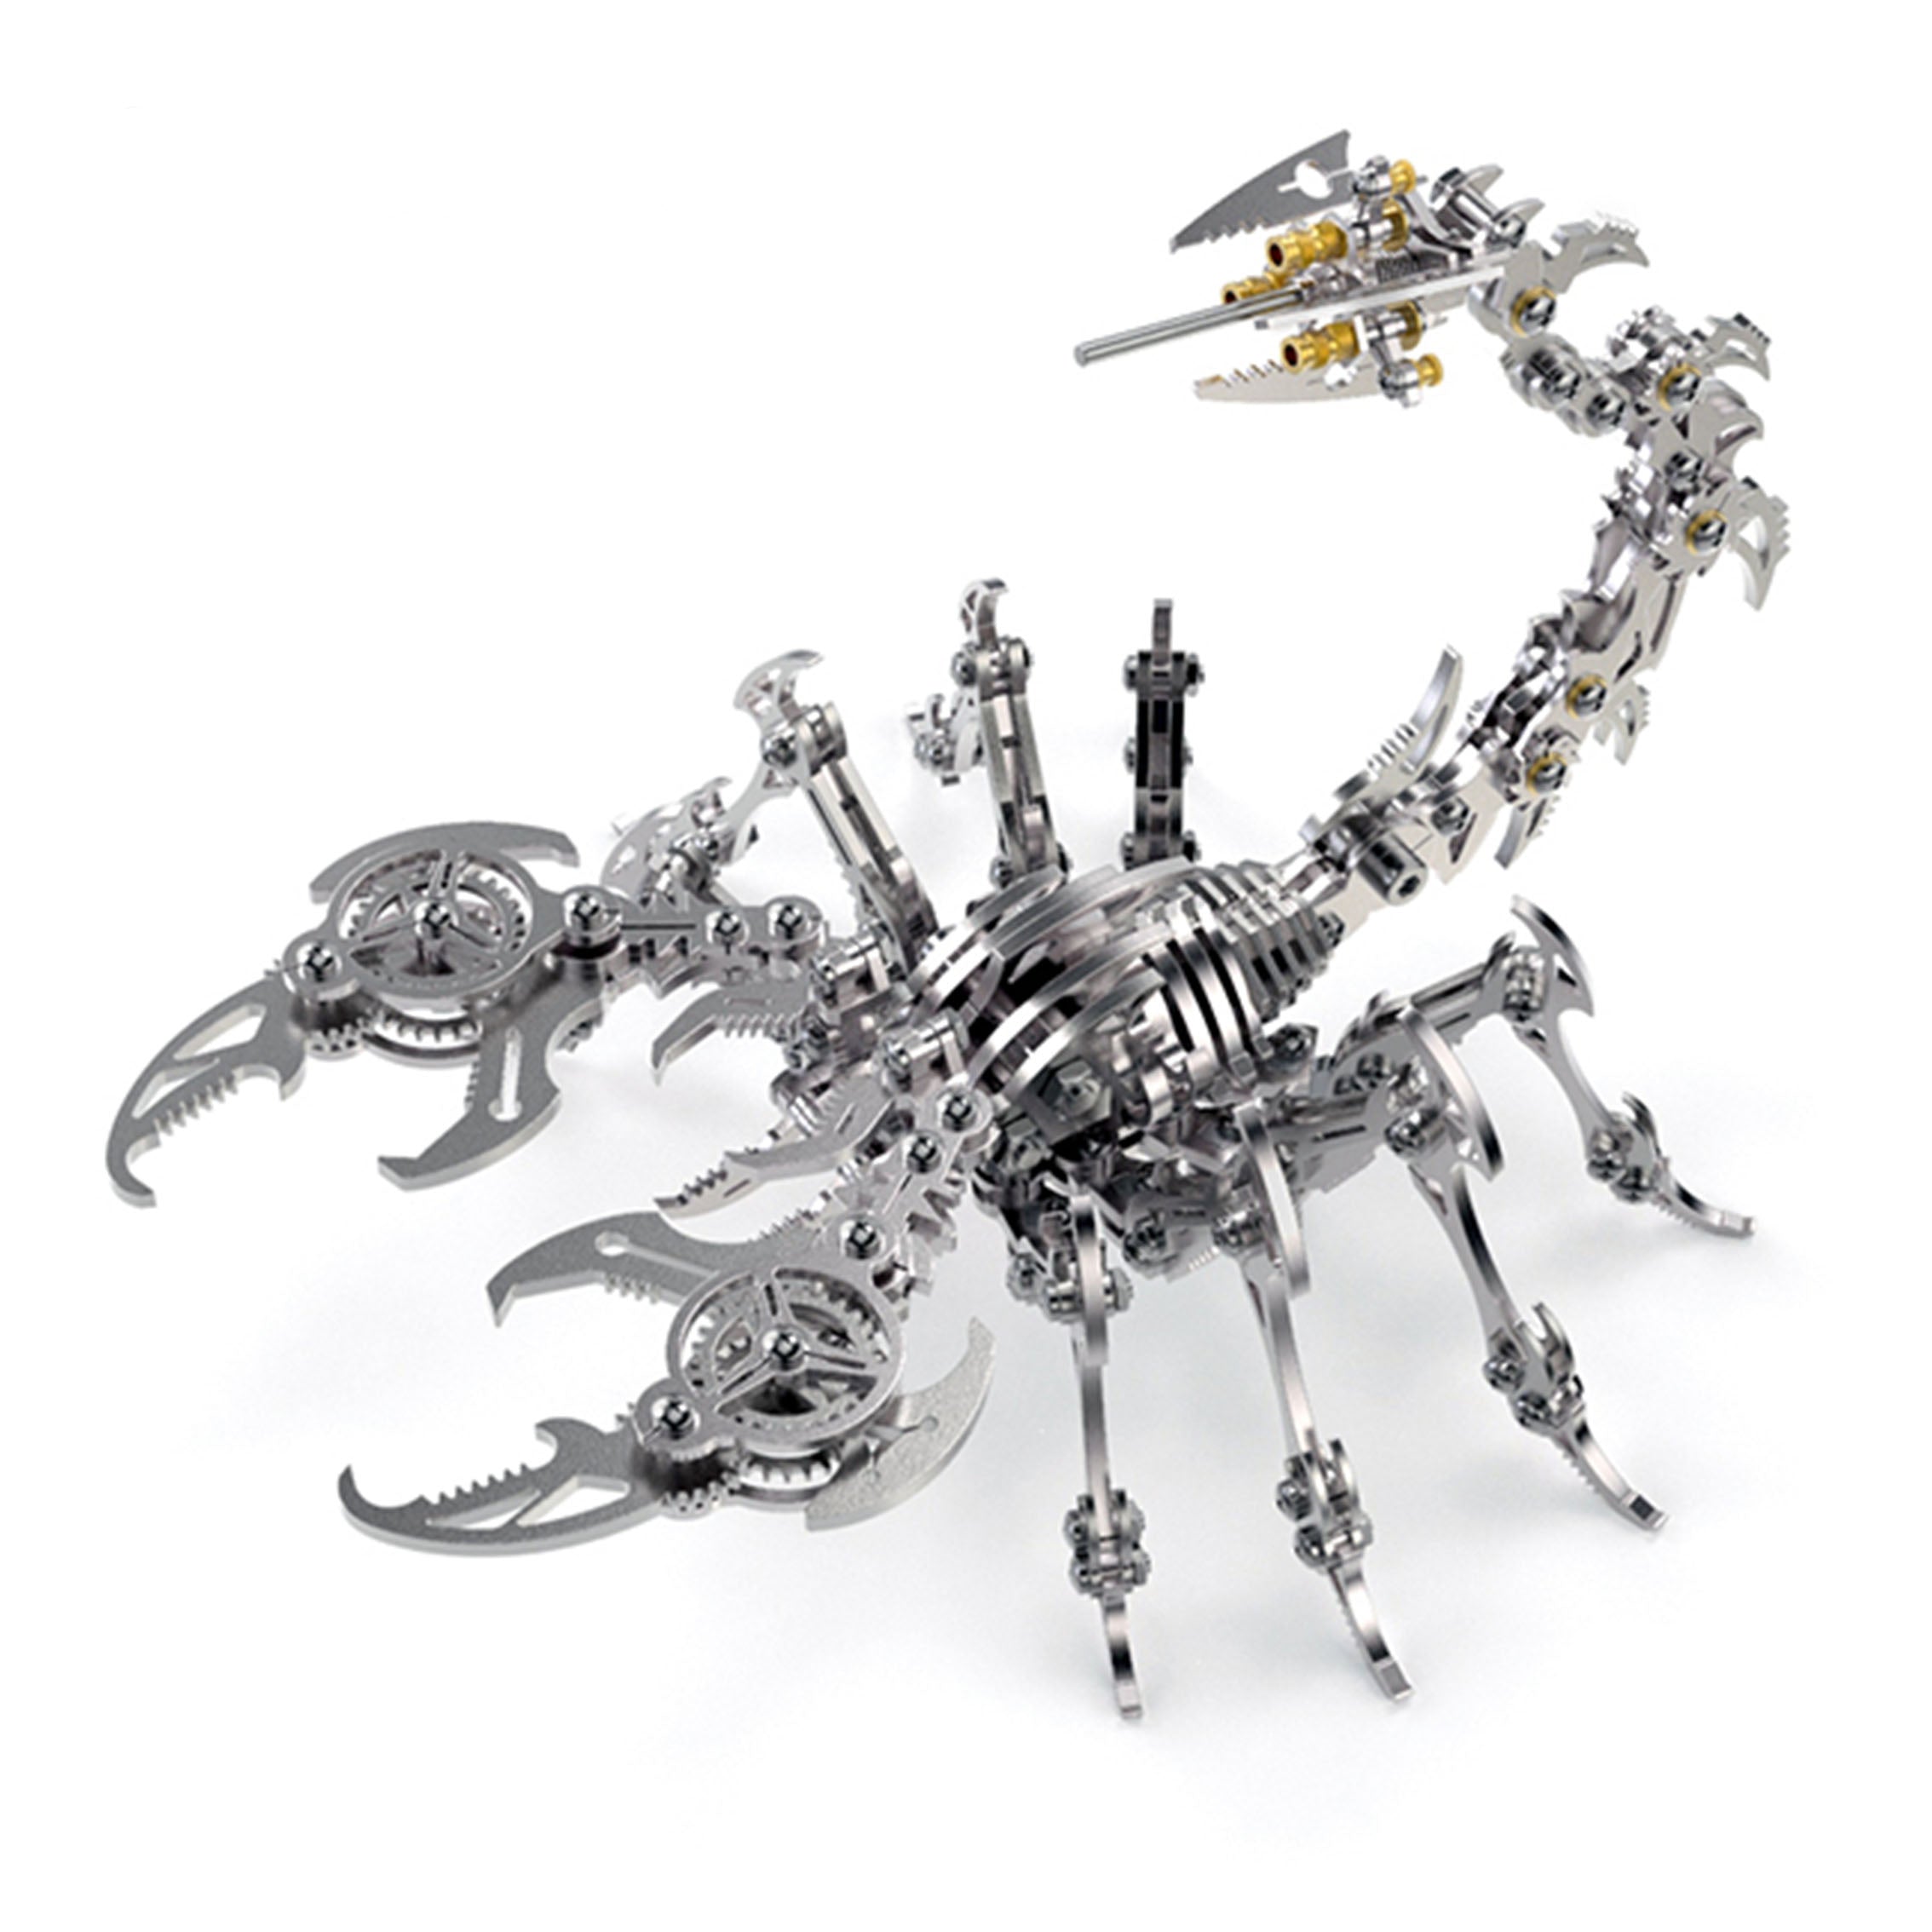 3D Metal Puzzle Scorpion DIY Model Kit, Puzzle Jigsaw Scorpion